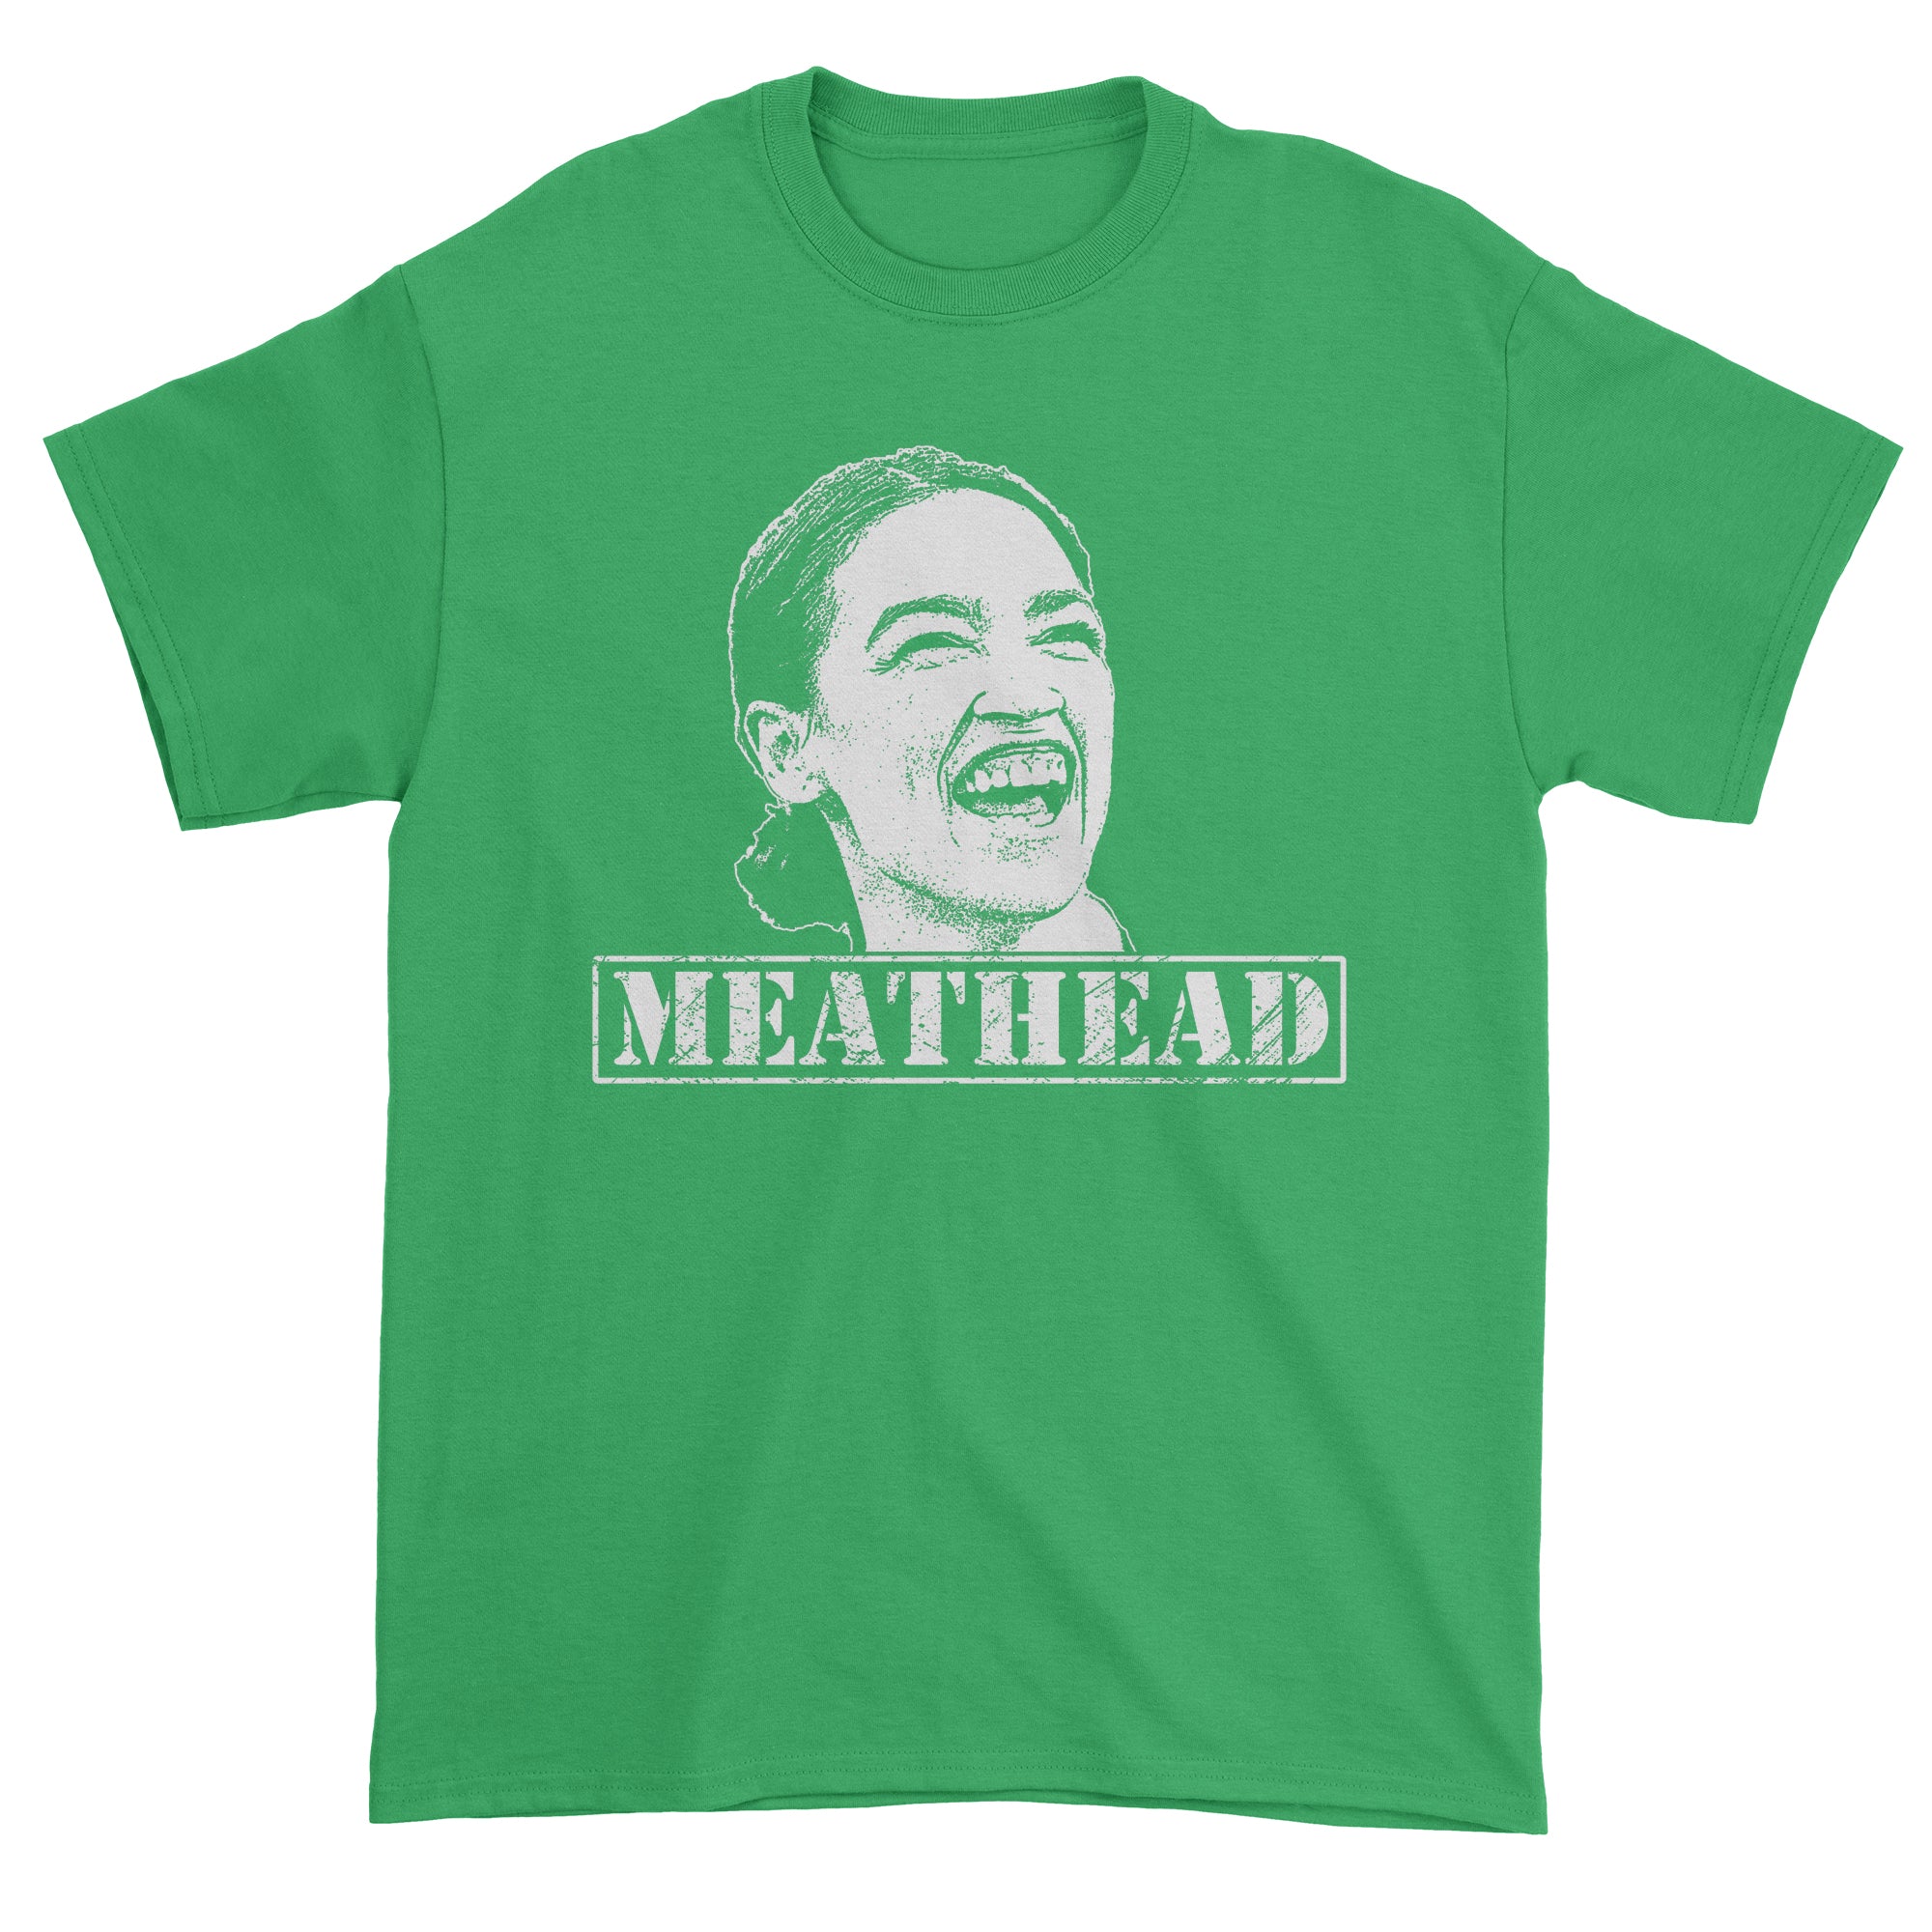 Anti AOC Green New Deal Meathead Men's T-Shirt